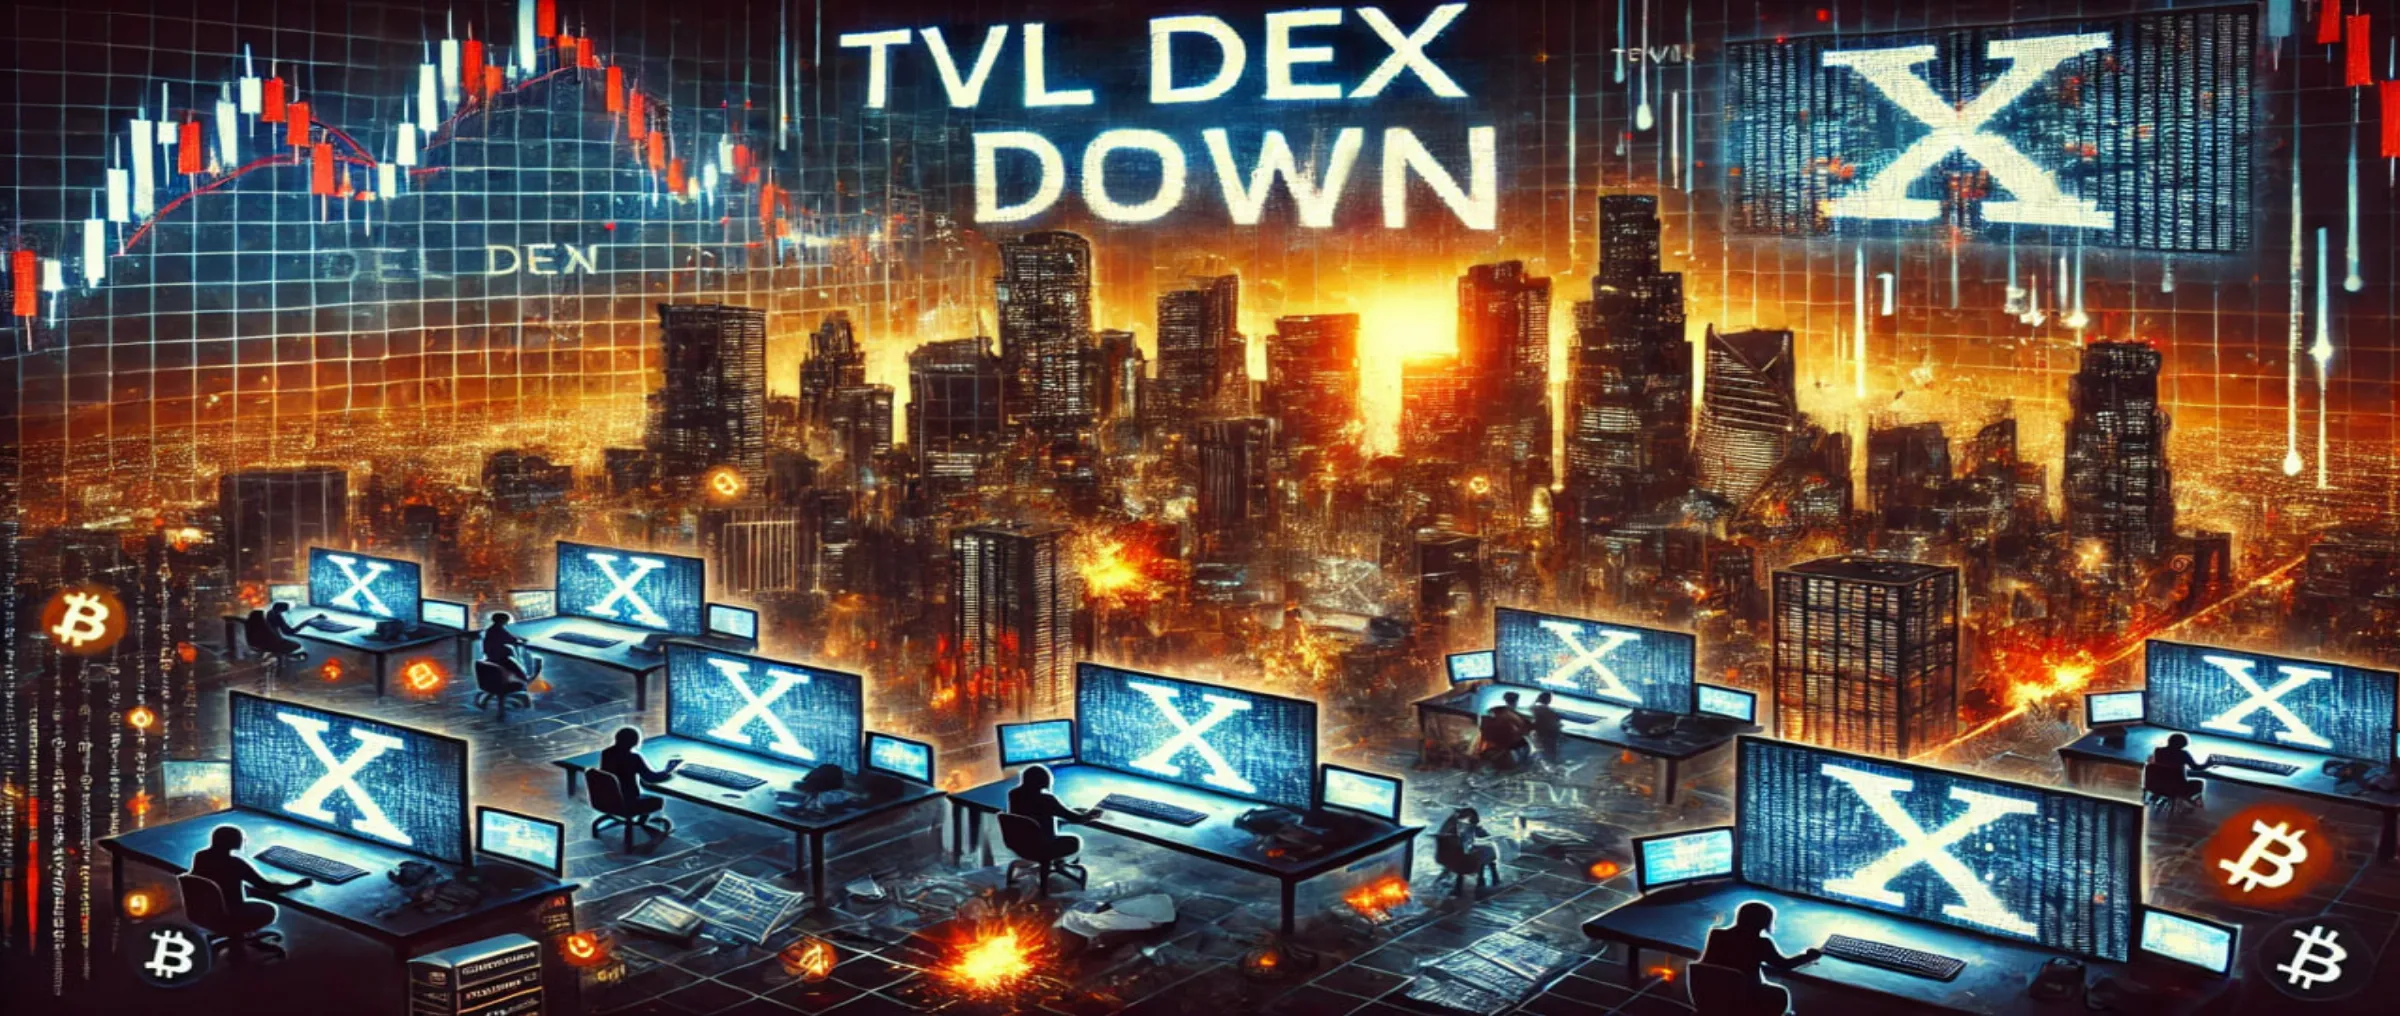 TVL DEX резко упала на прошлой неделе